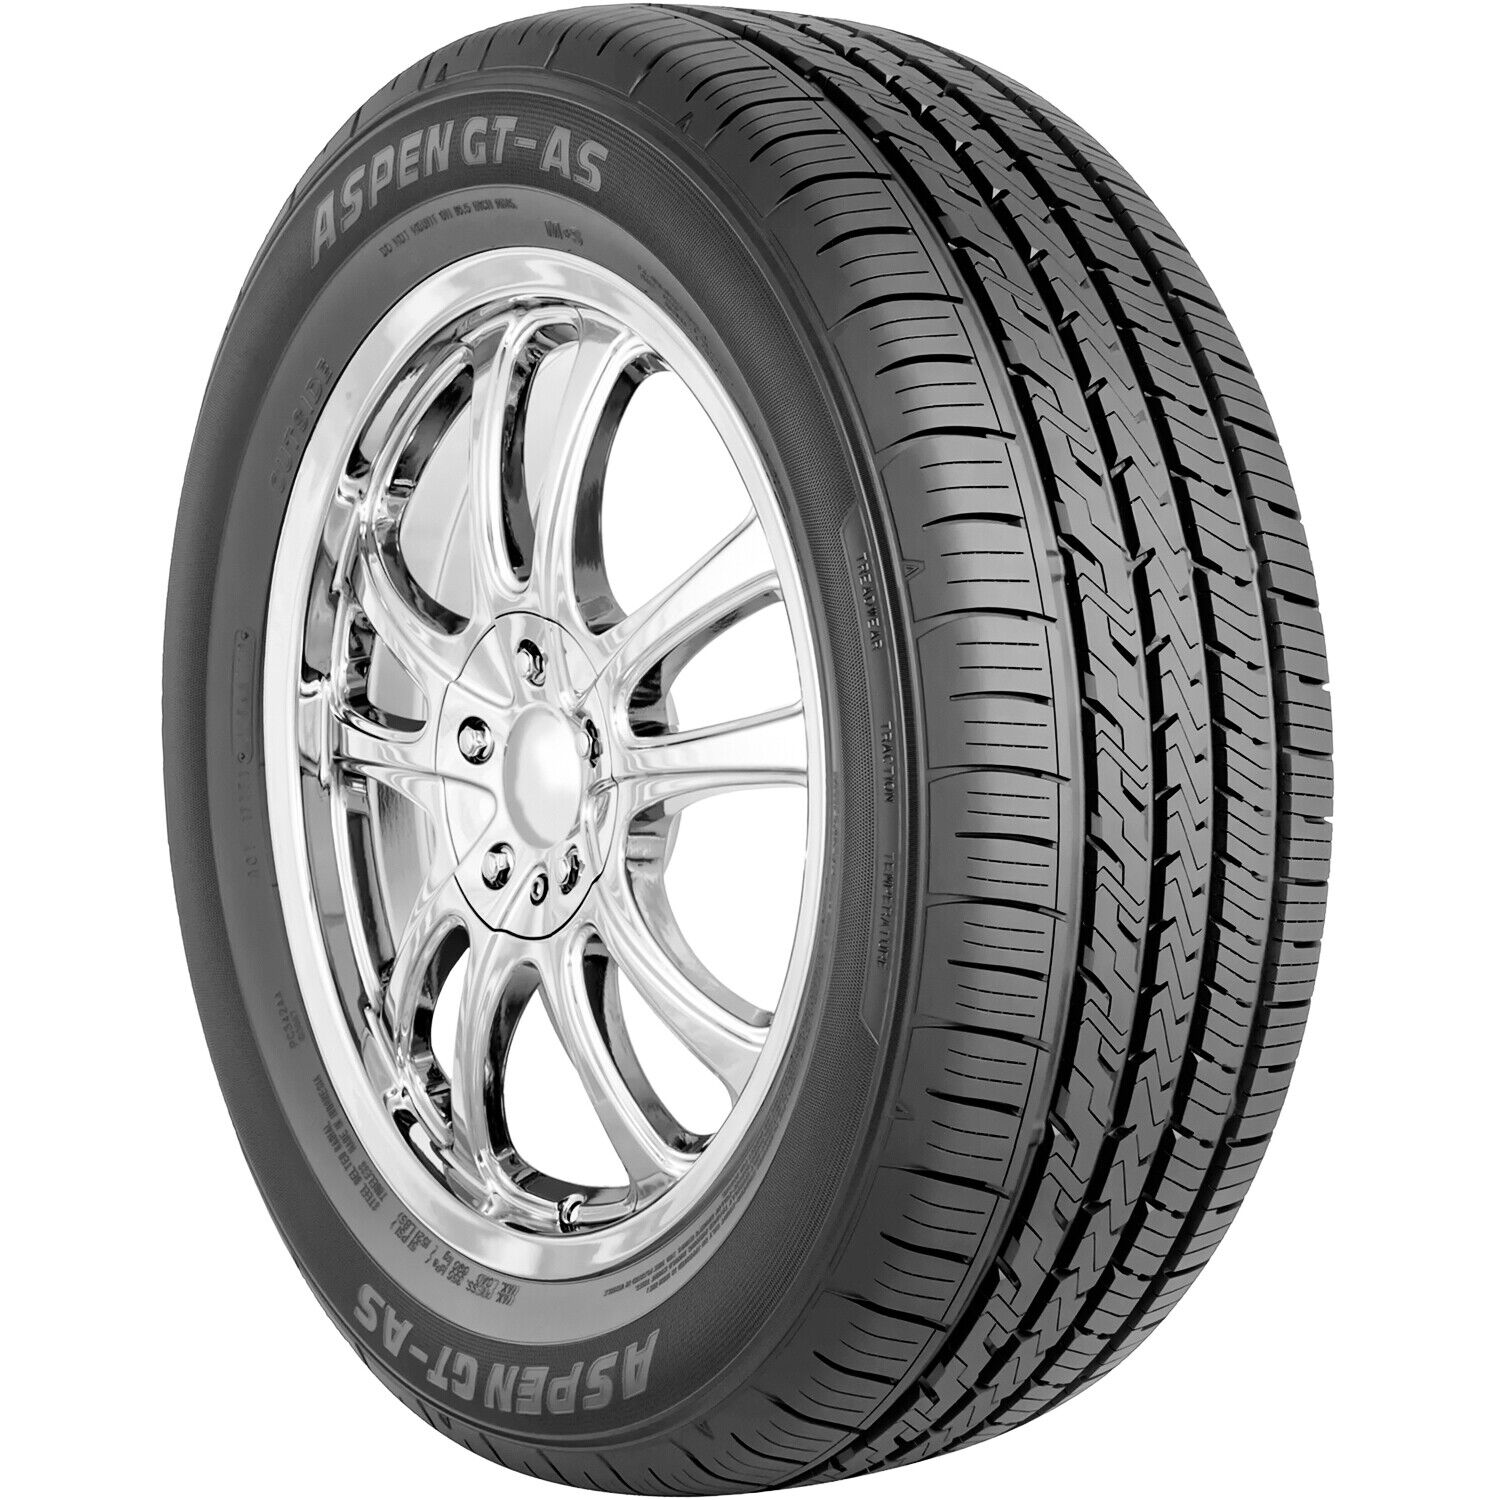 Tire 205/60R15 Aspen GT-AS AS A/S All Season 91H